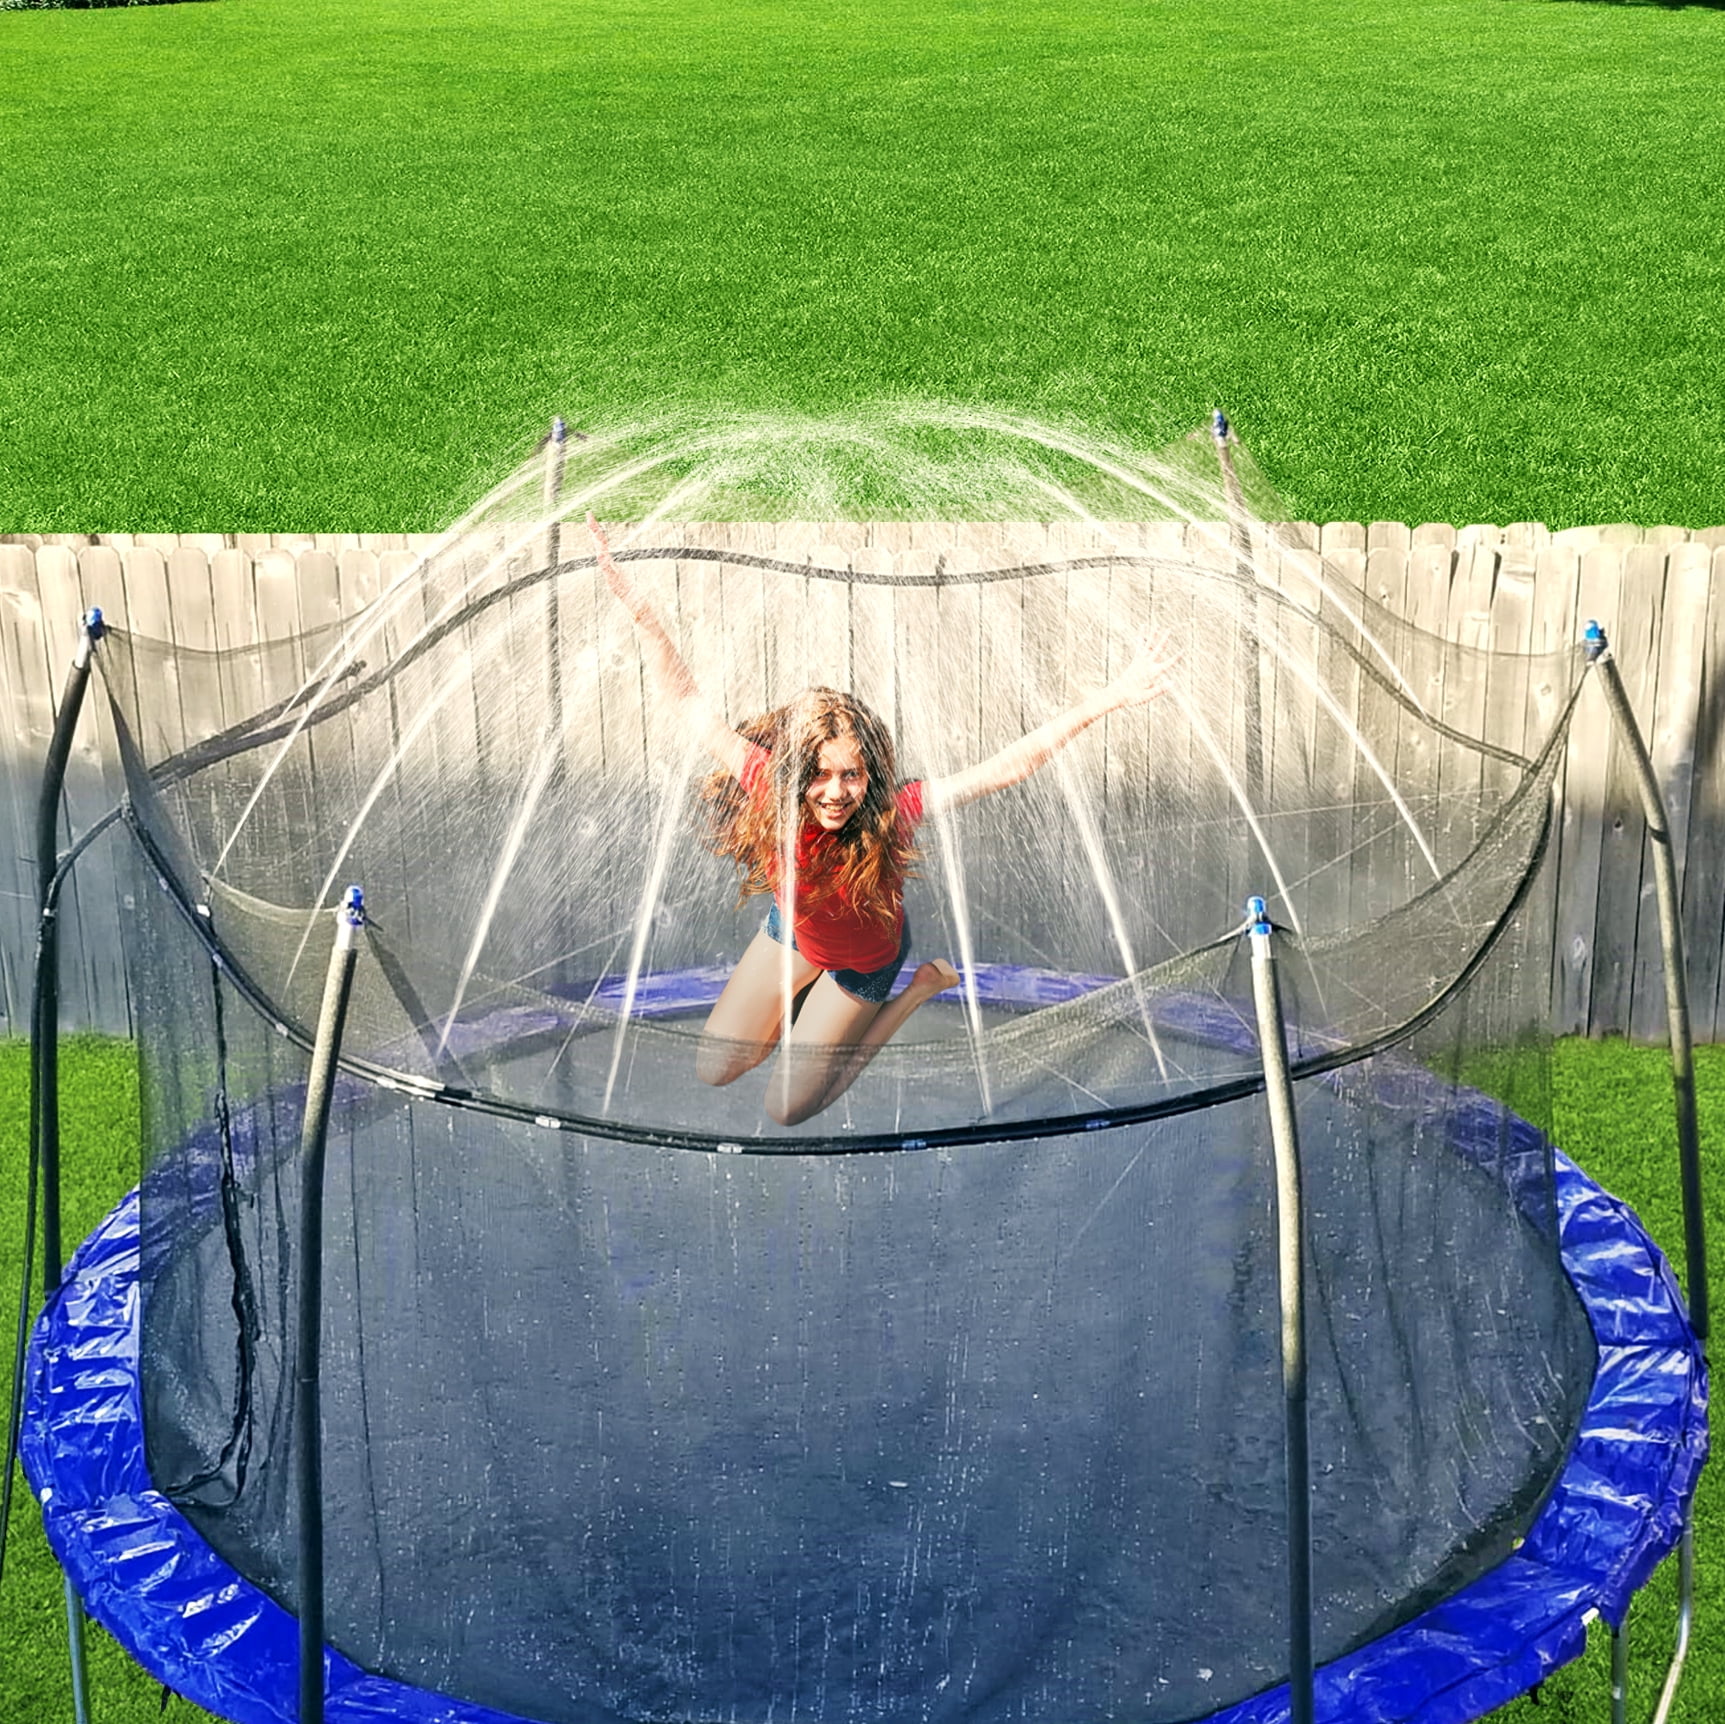 Joyin 7' Round Backyard Sprinkler and Safety Enclosure for